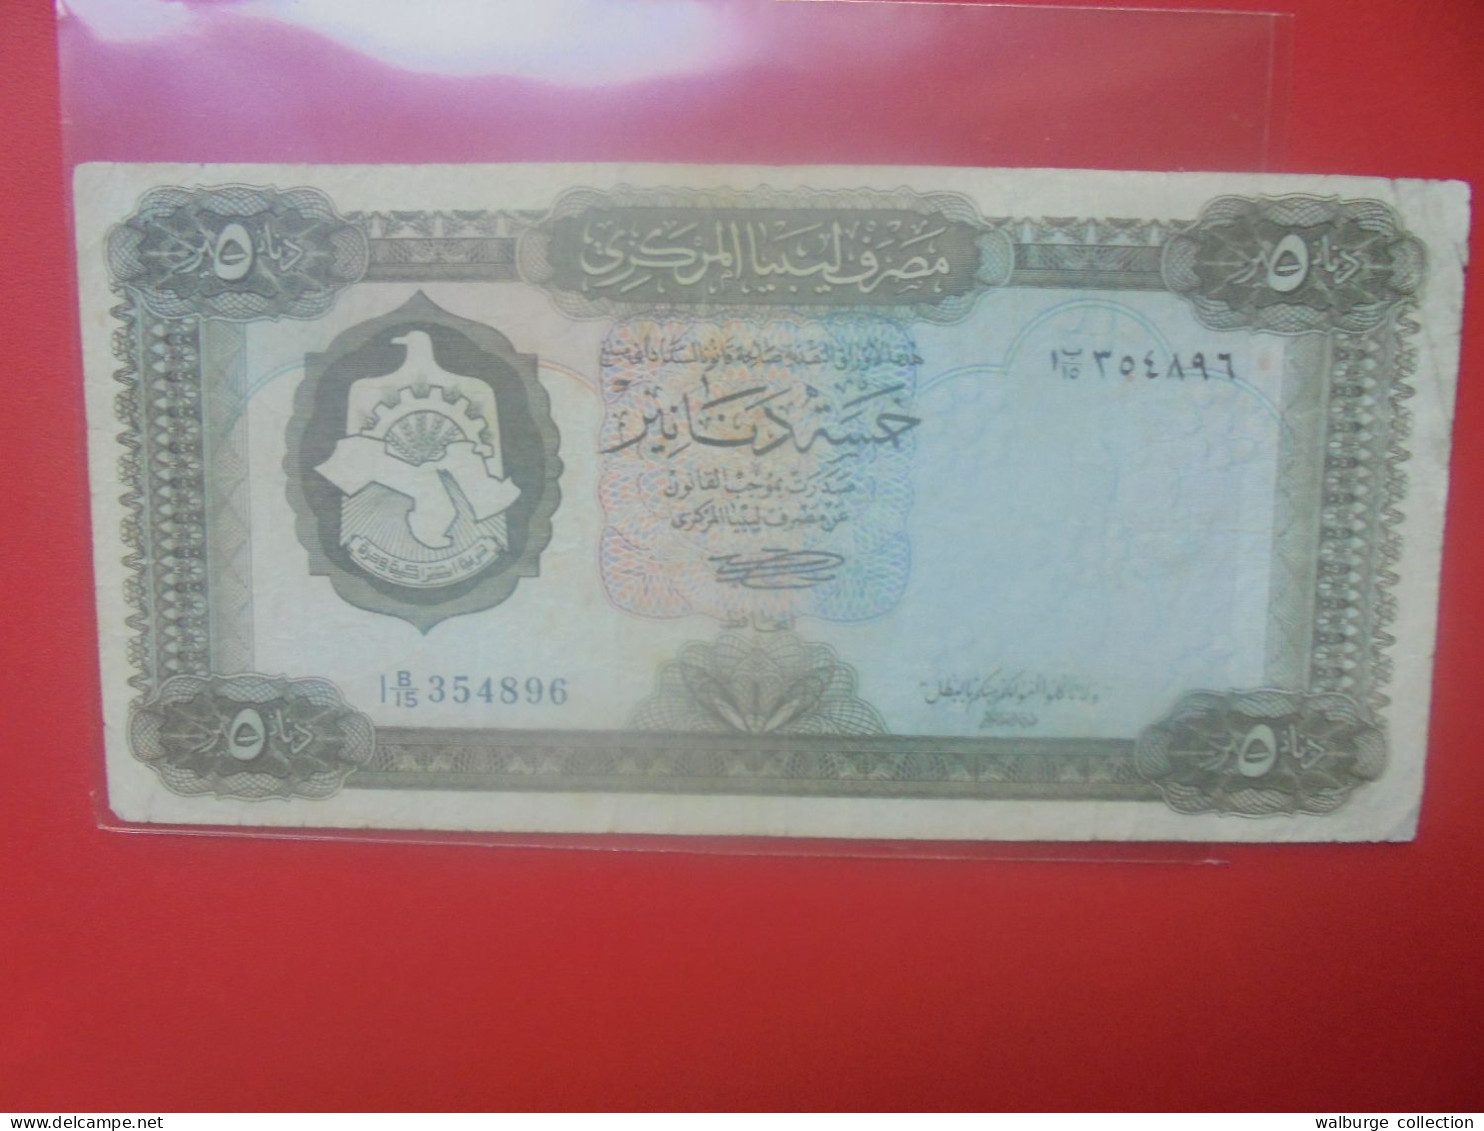 LIBYE 5 DINARS 1971-72 Circuler (B.33) - Libia